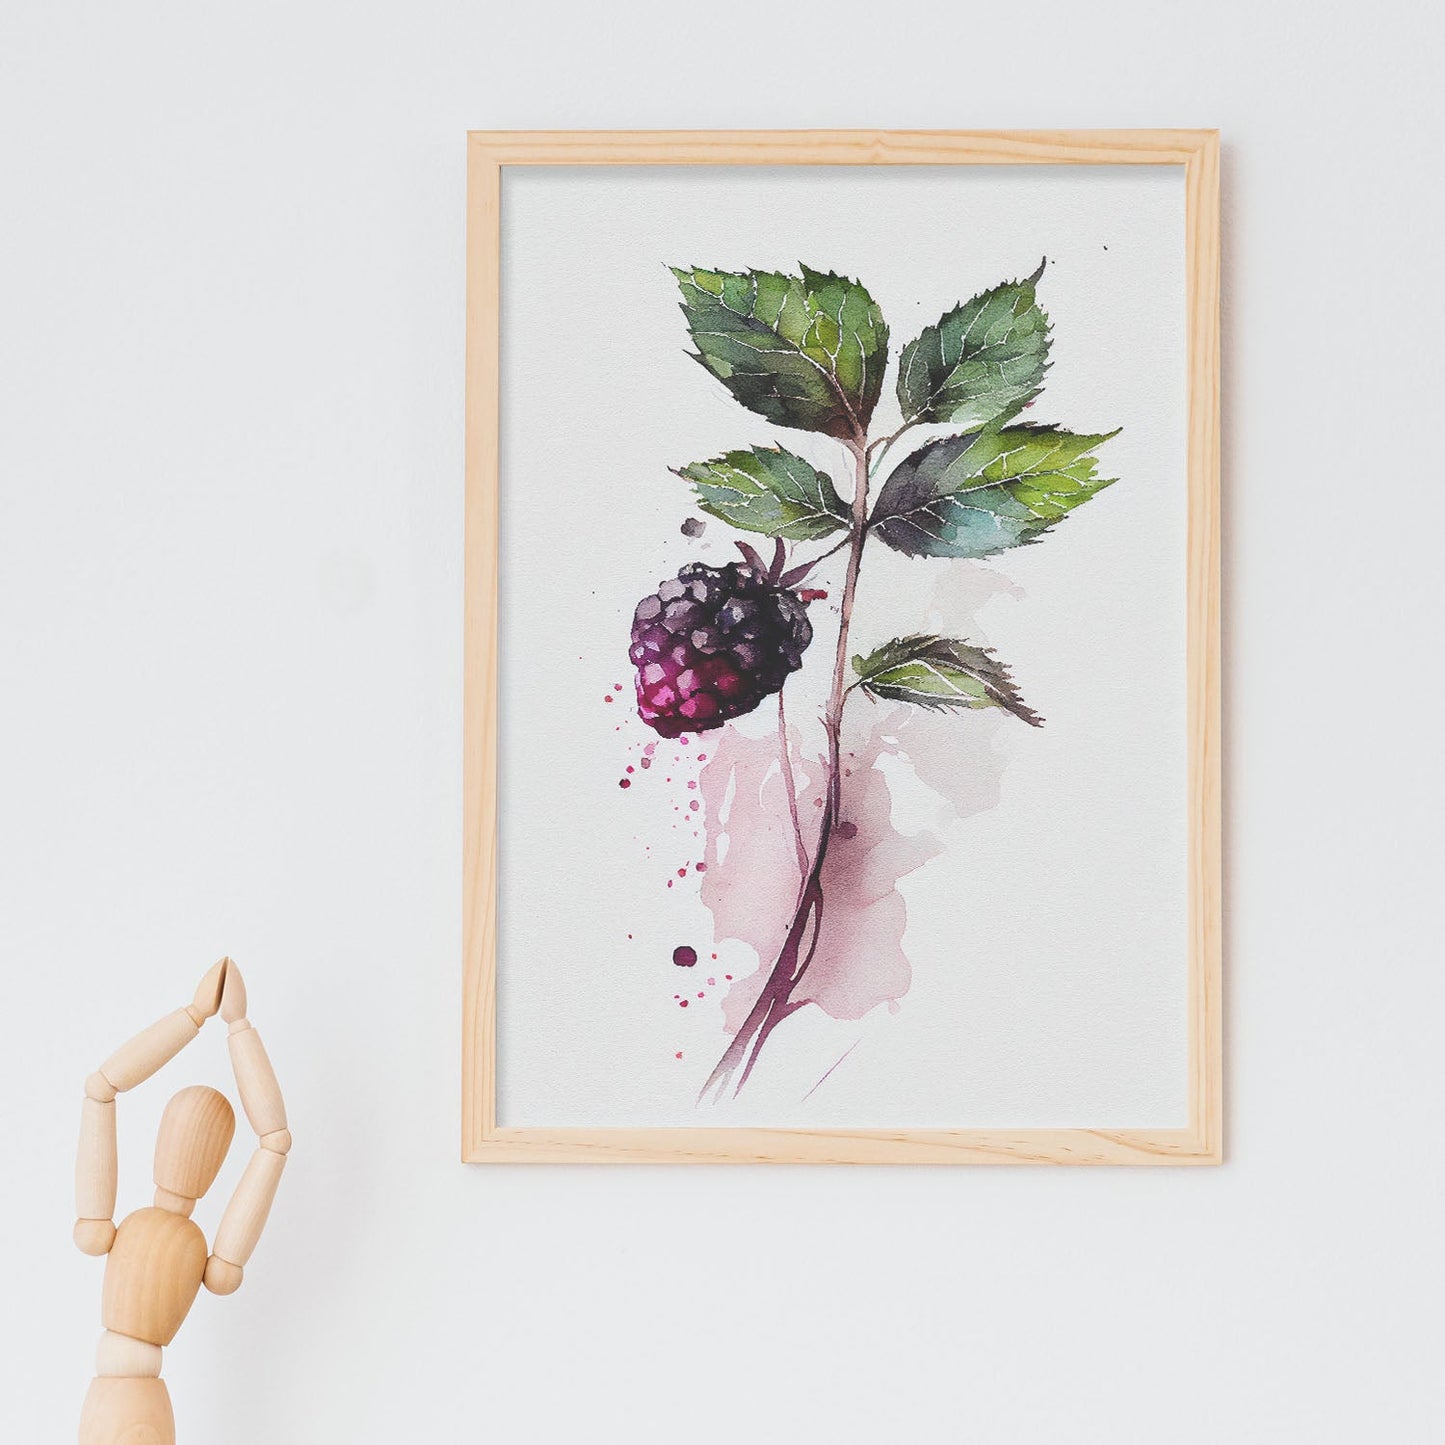 Nacnic minimalist Boysenberry. Aesthetic Wall Art Prints for Bedroom or Living Room Design.